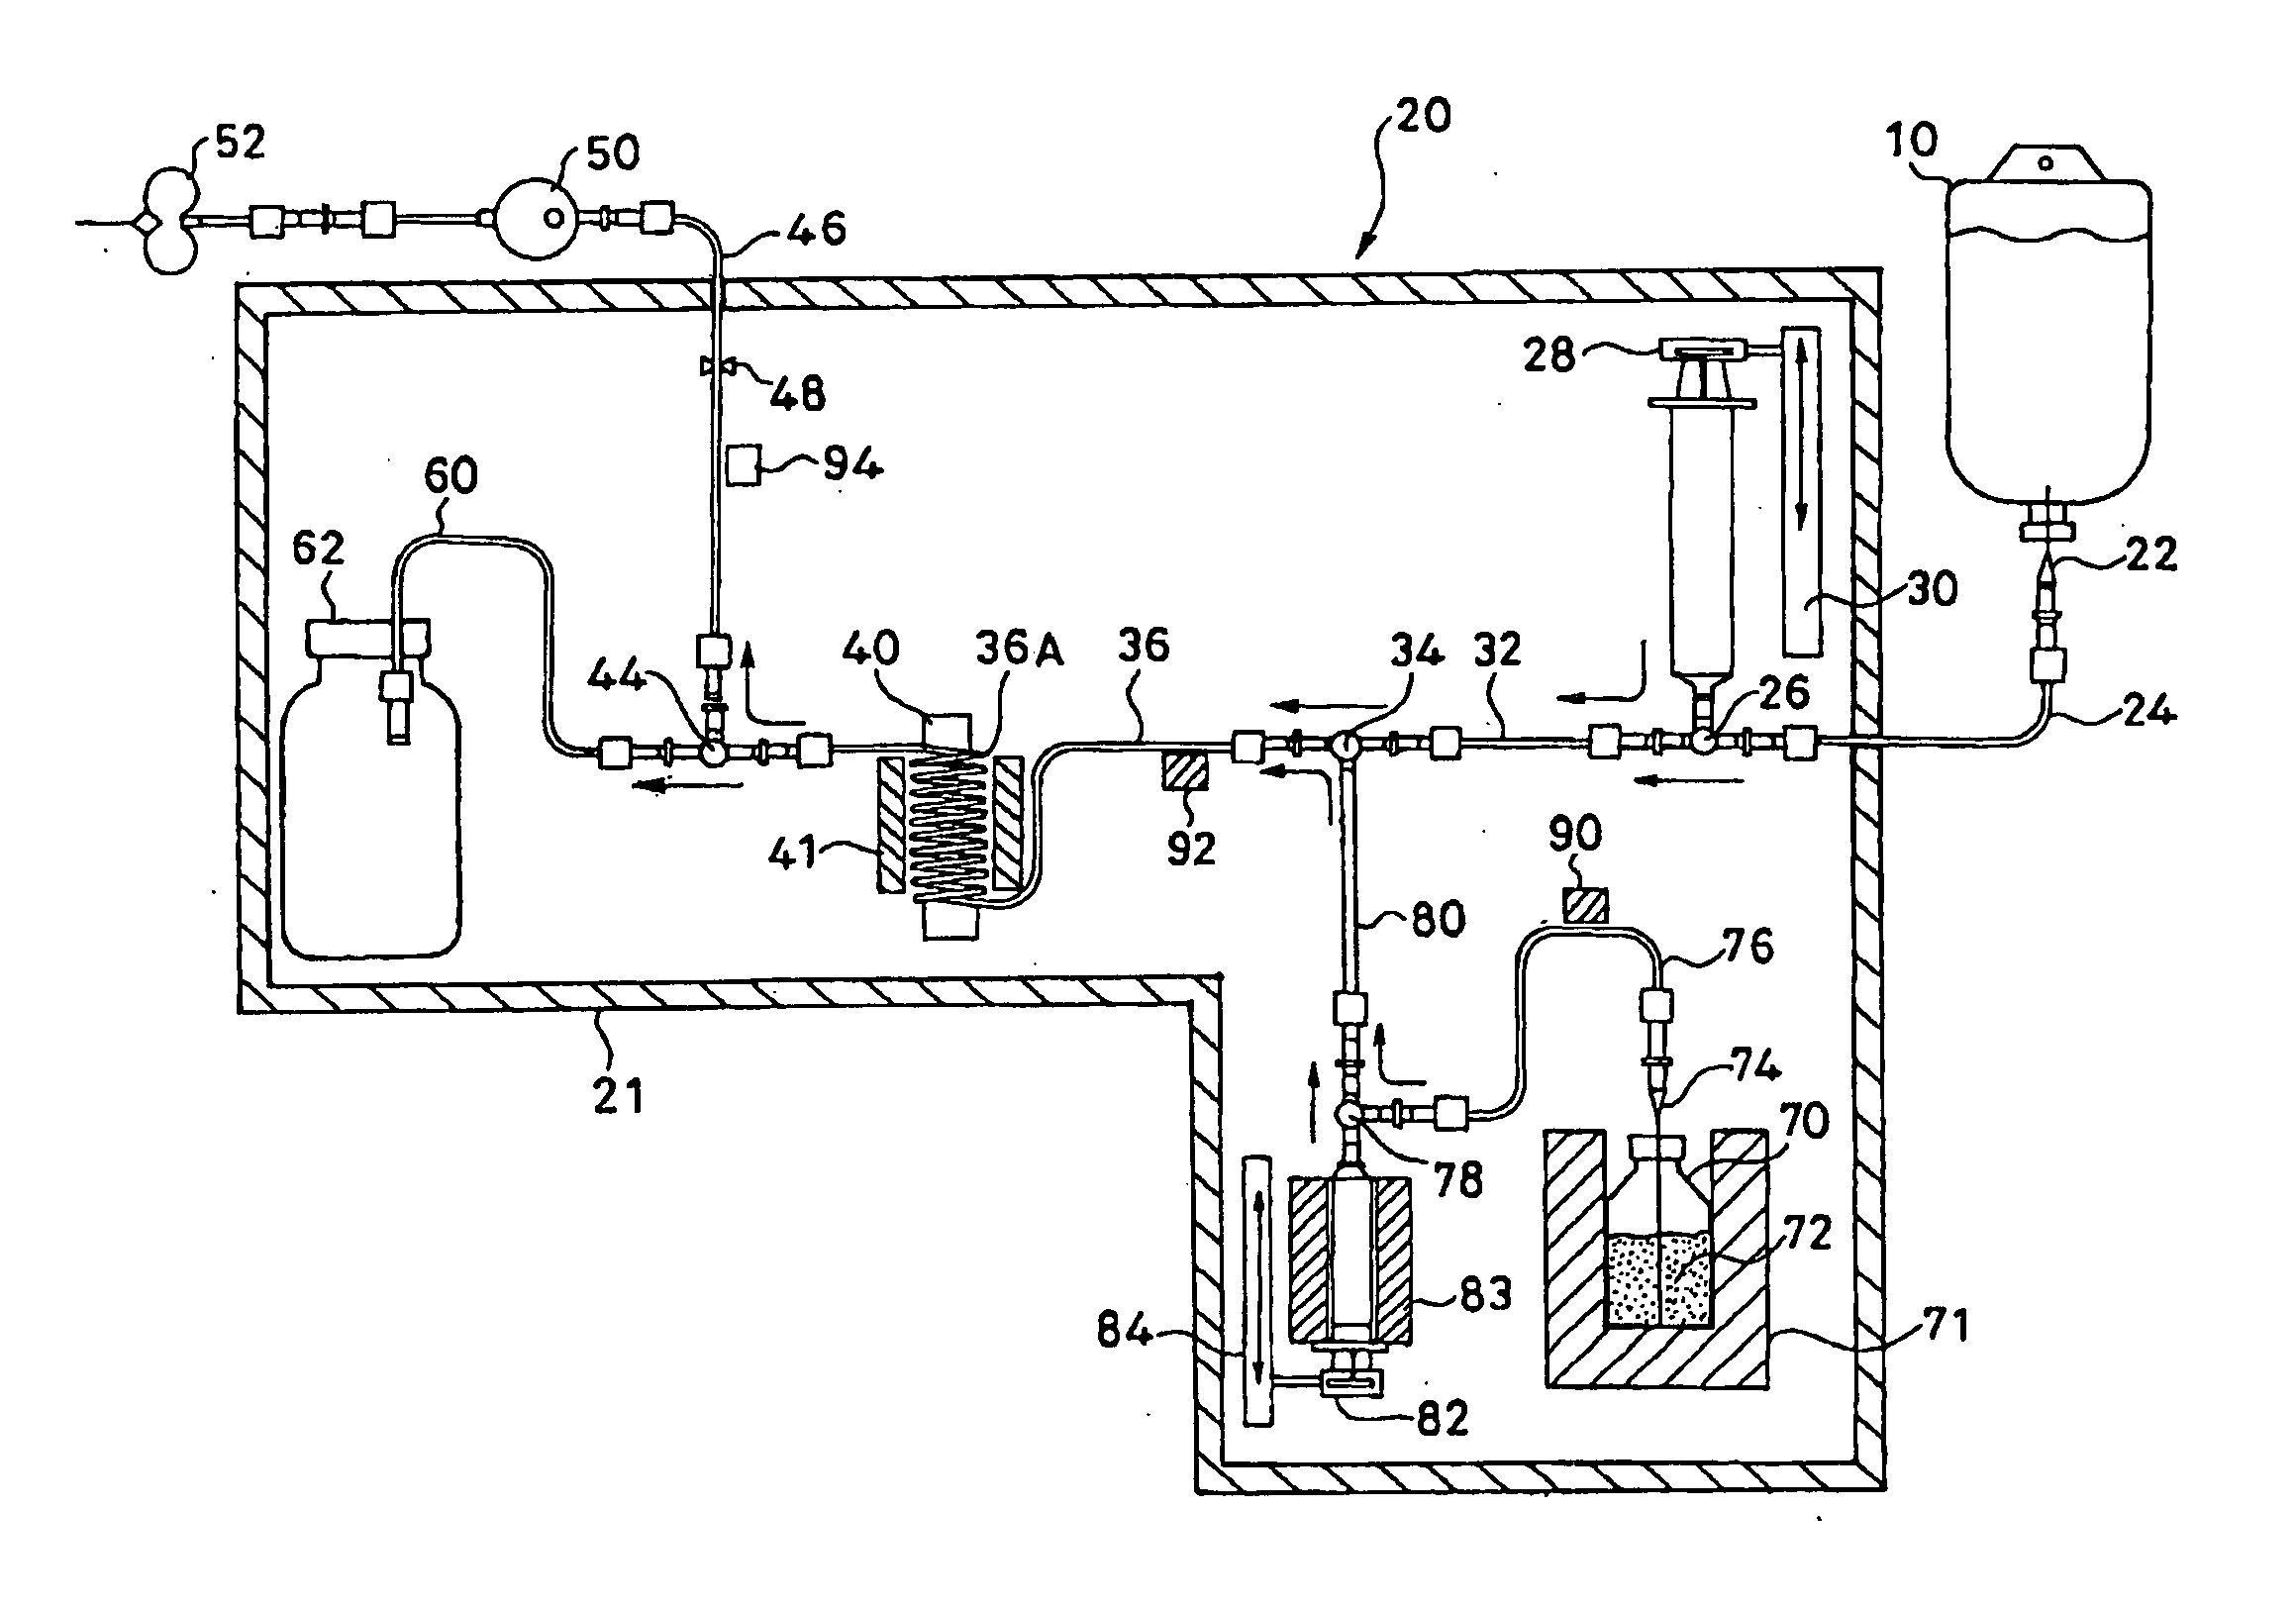 Method and apparatus for dispensing radioactive liquid